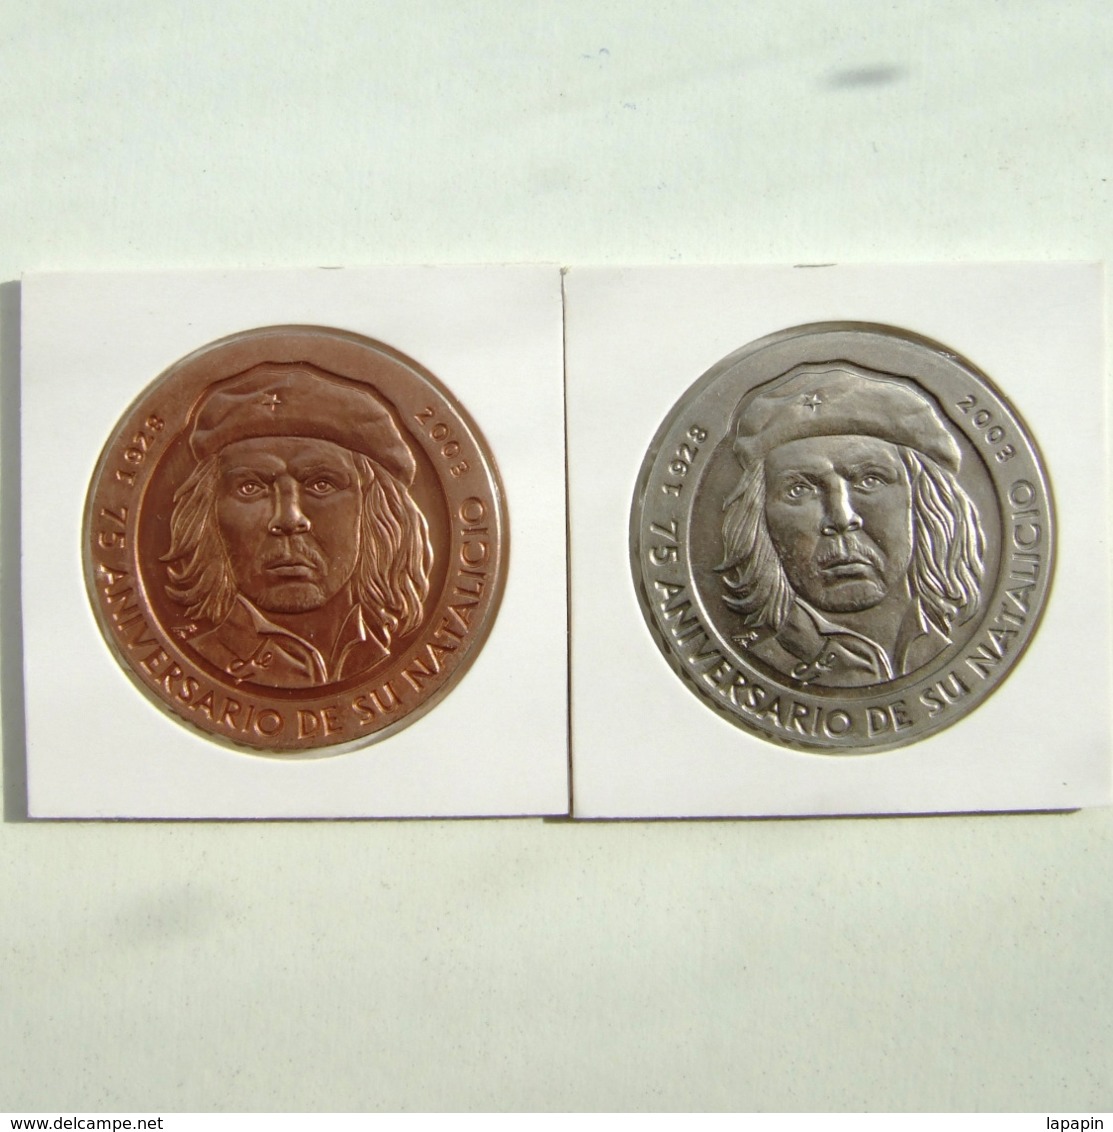 Lp Cuba - 2003 - 1 Peso - Che  Guevara (2 Coins) - Cuba